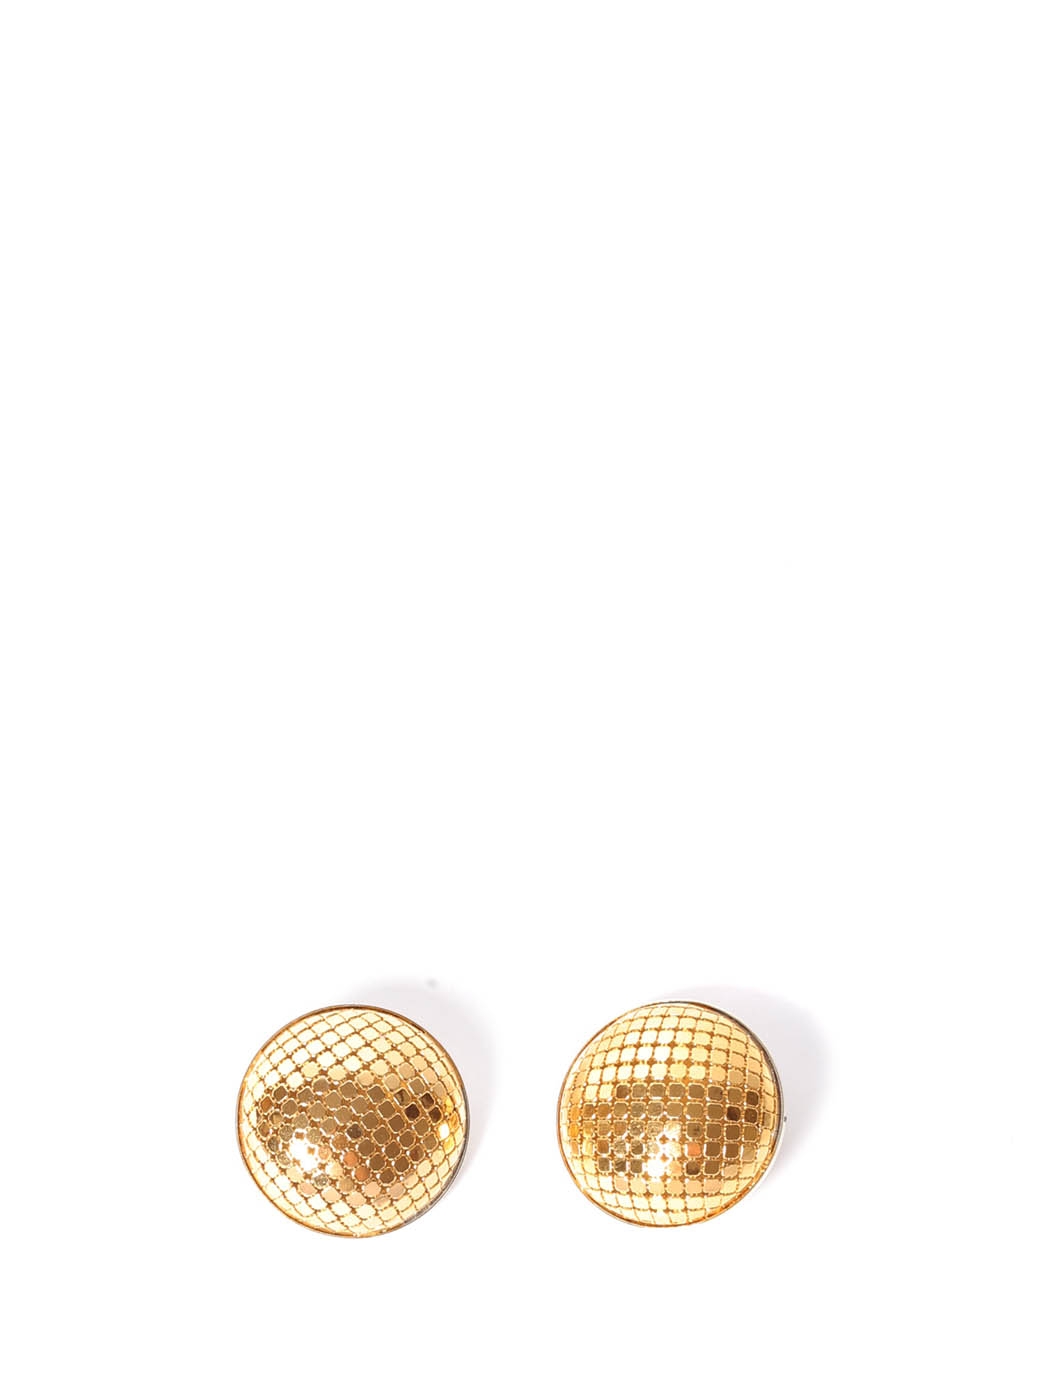 Round Beaded Rawa Work Gold Stud Earrings | Tanishq